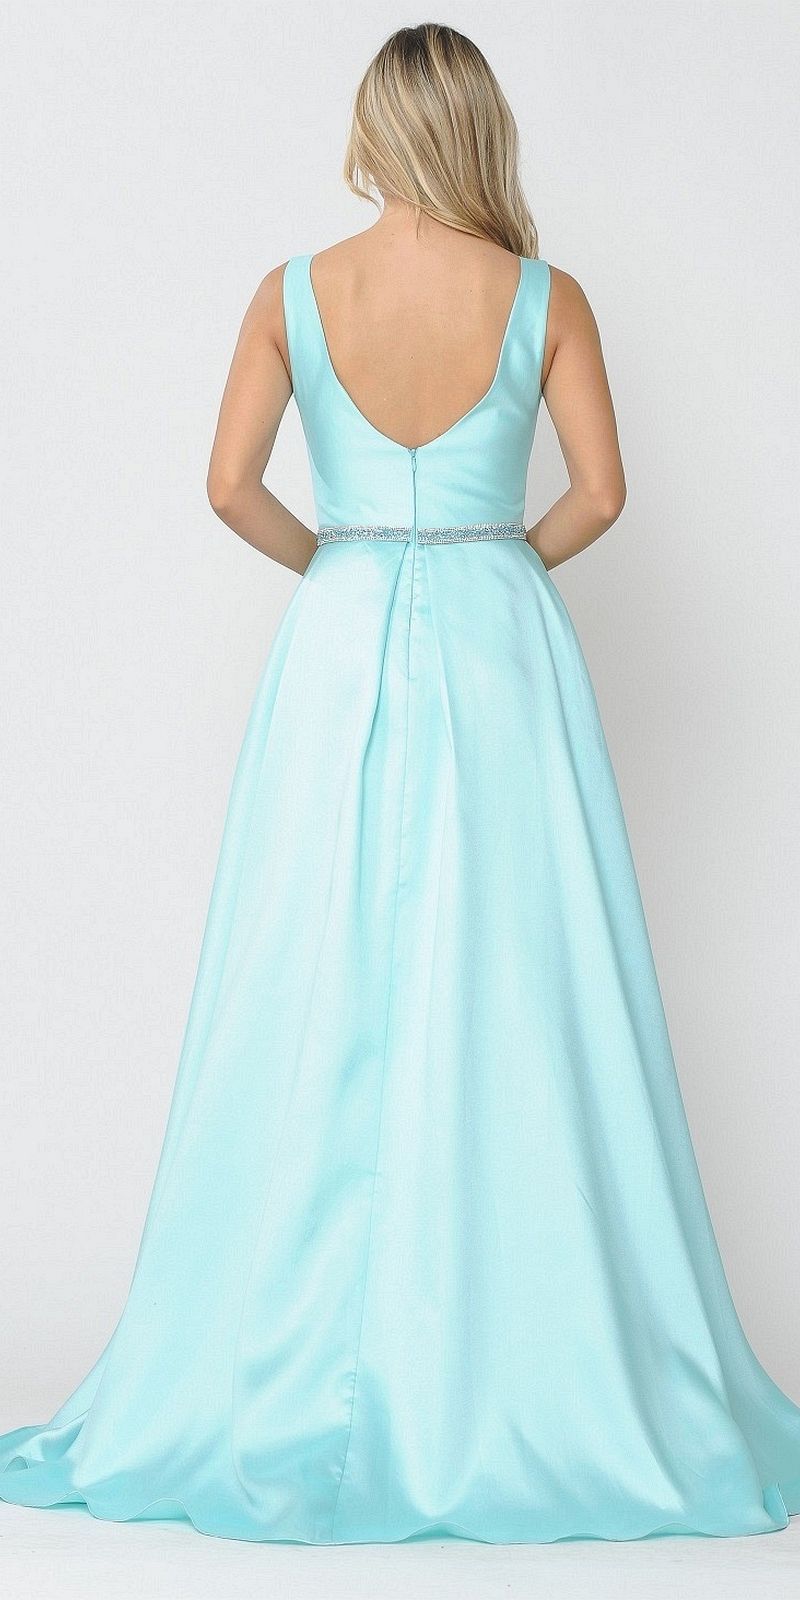 Poly USA 8678 Mint Sleeveless Long Prom Dress Embellished Waist